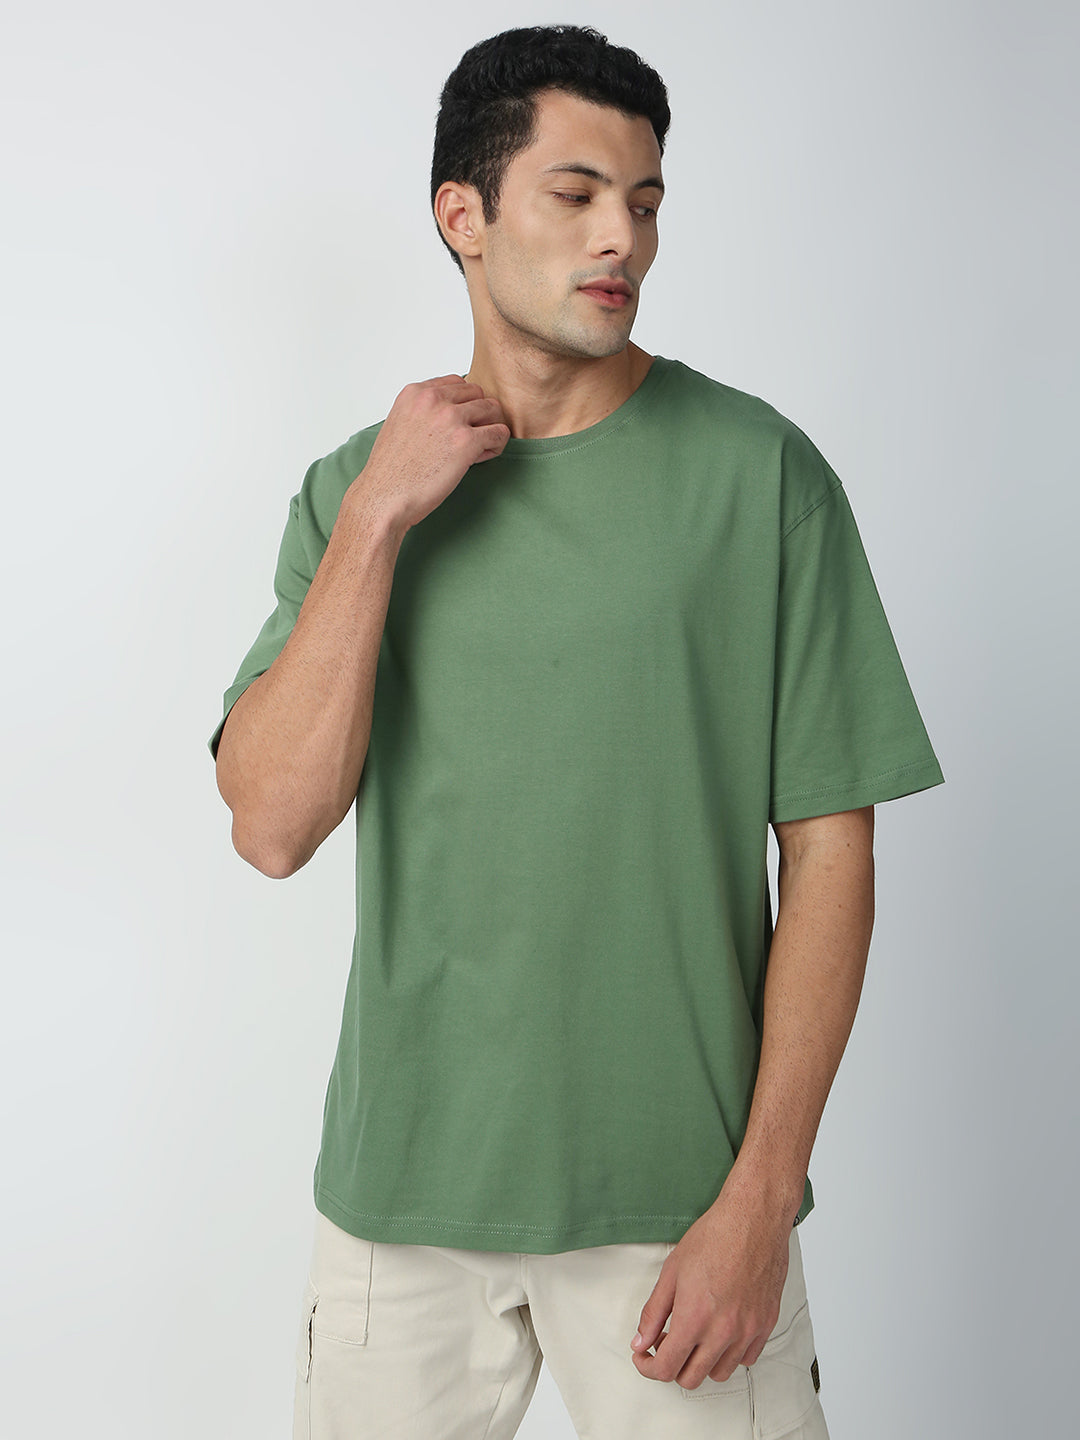 Buy Blamblack Men's Baggy Green Color Back Printed Round Neck T-Shirt